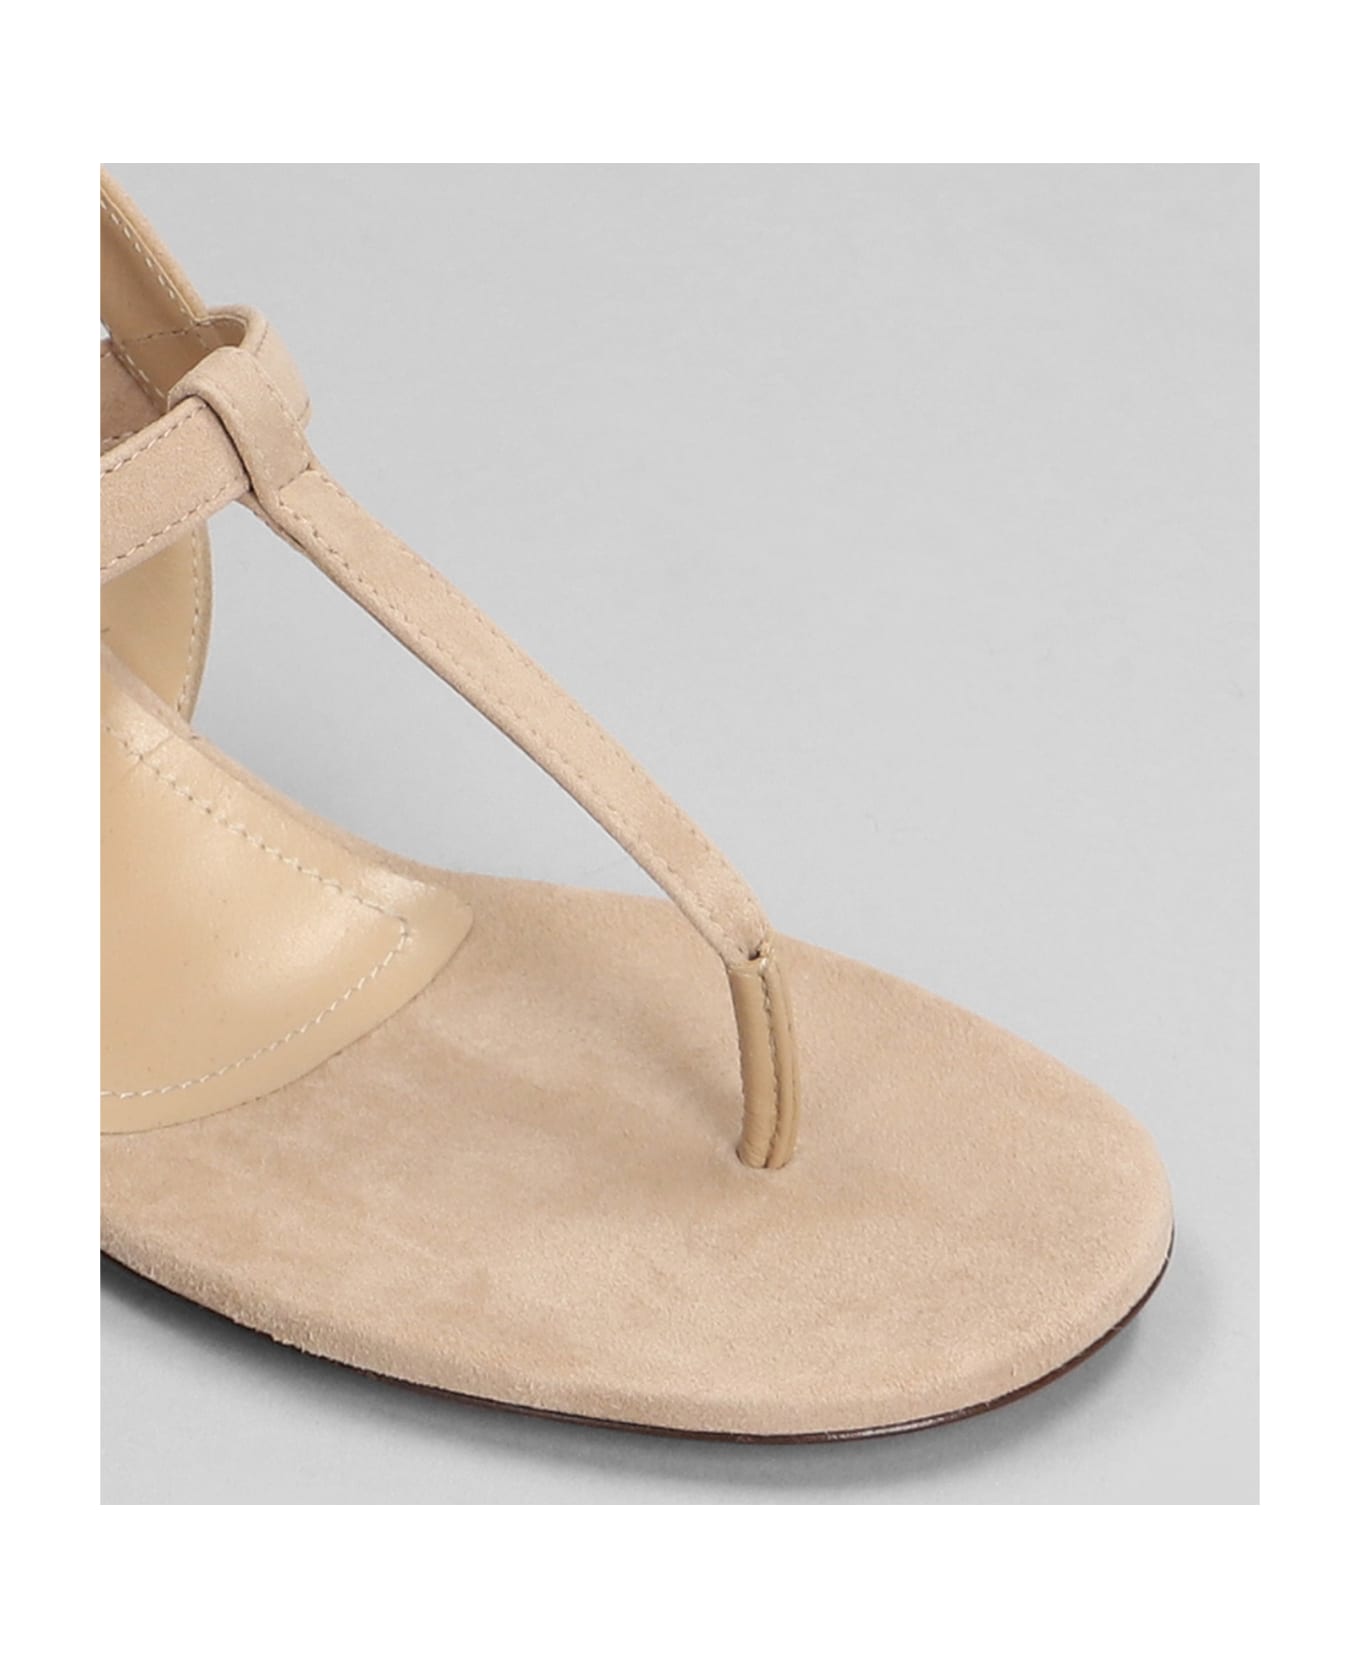 Relac Sandals In Beige Suede - beige サンダル